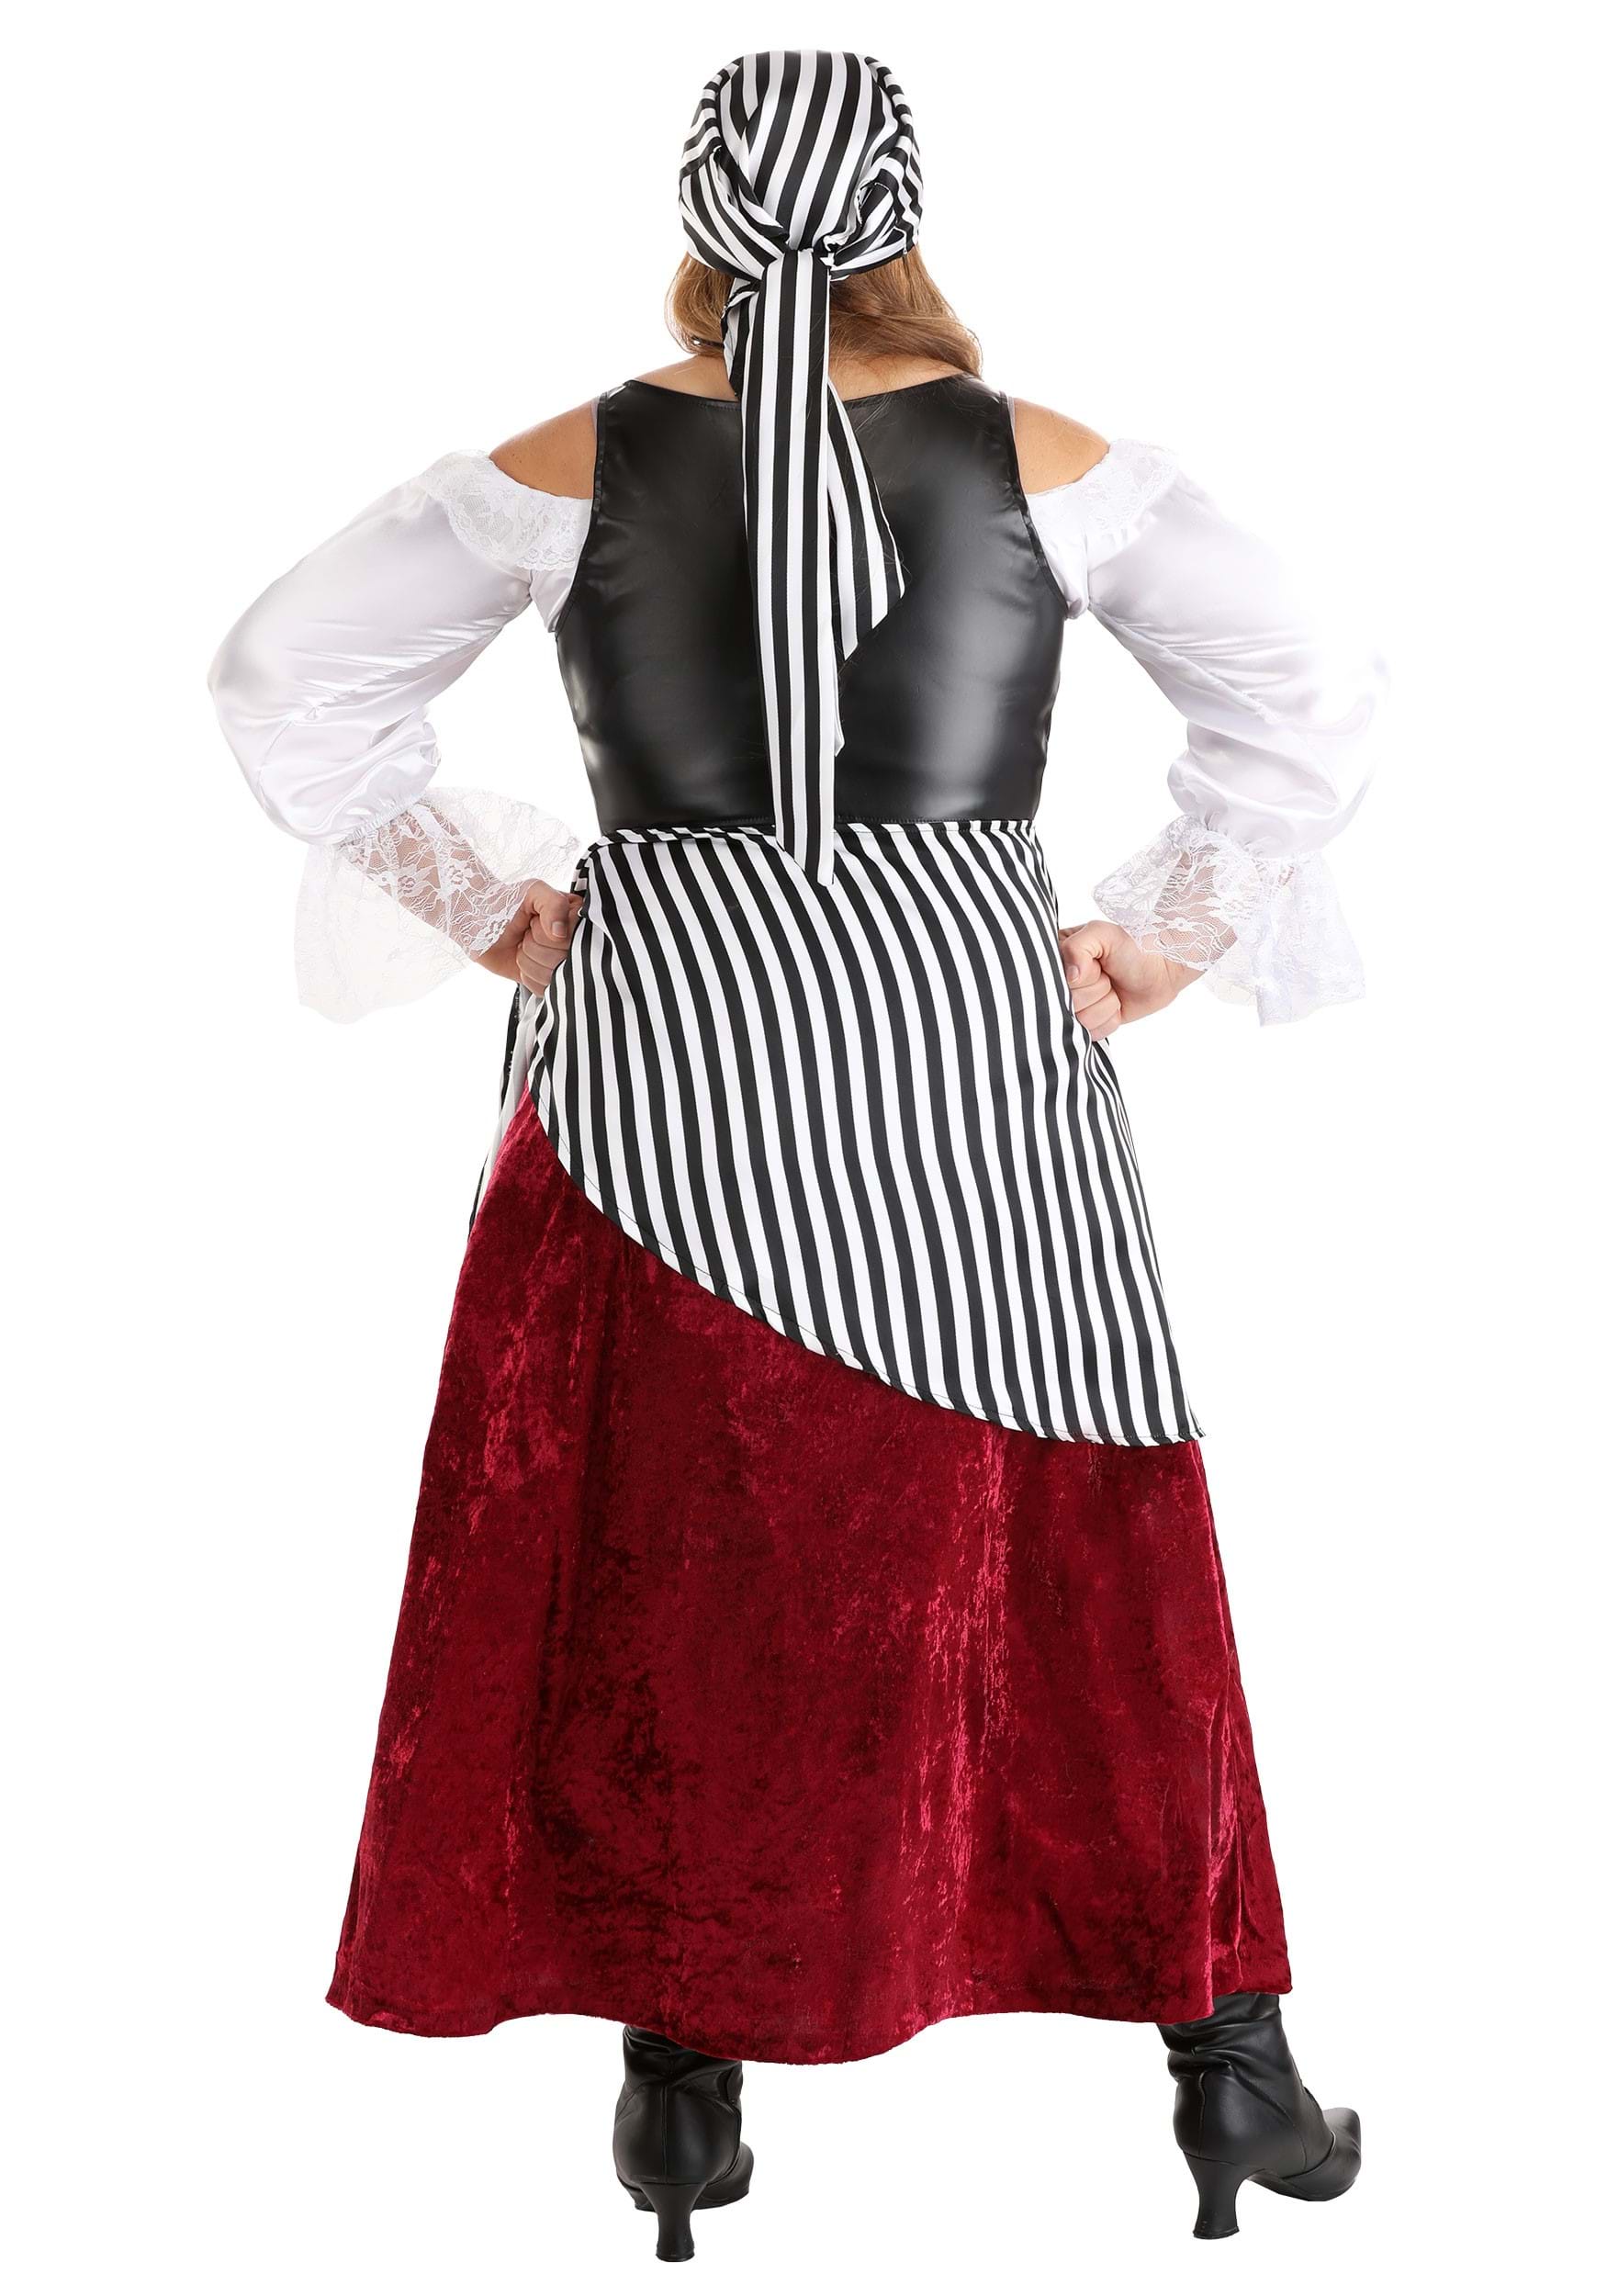 Deluxe Pirate Wench Costume , Exclusive , Sea Maiden Costume